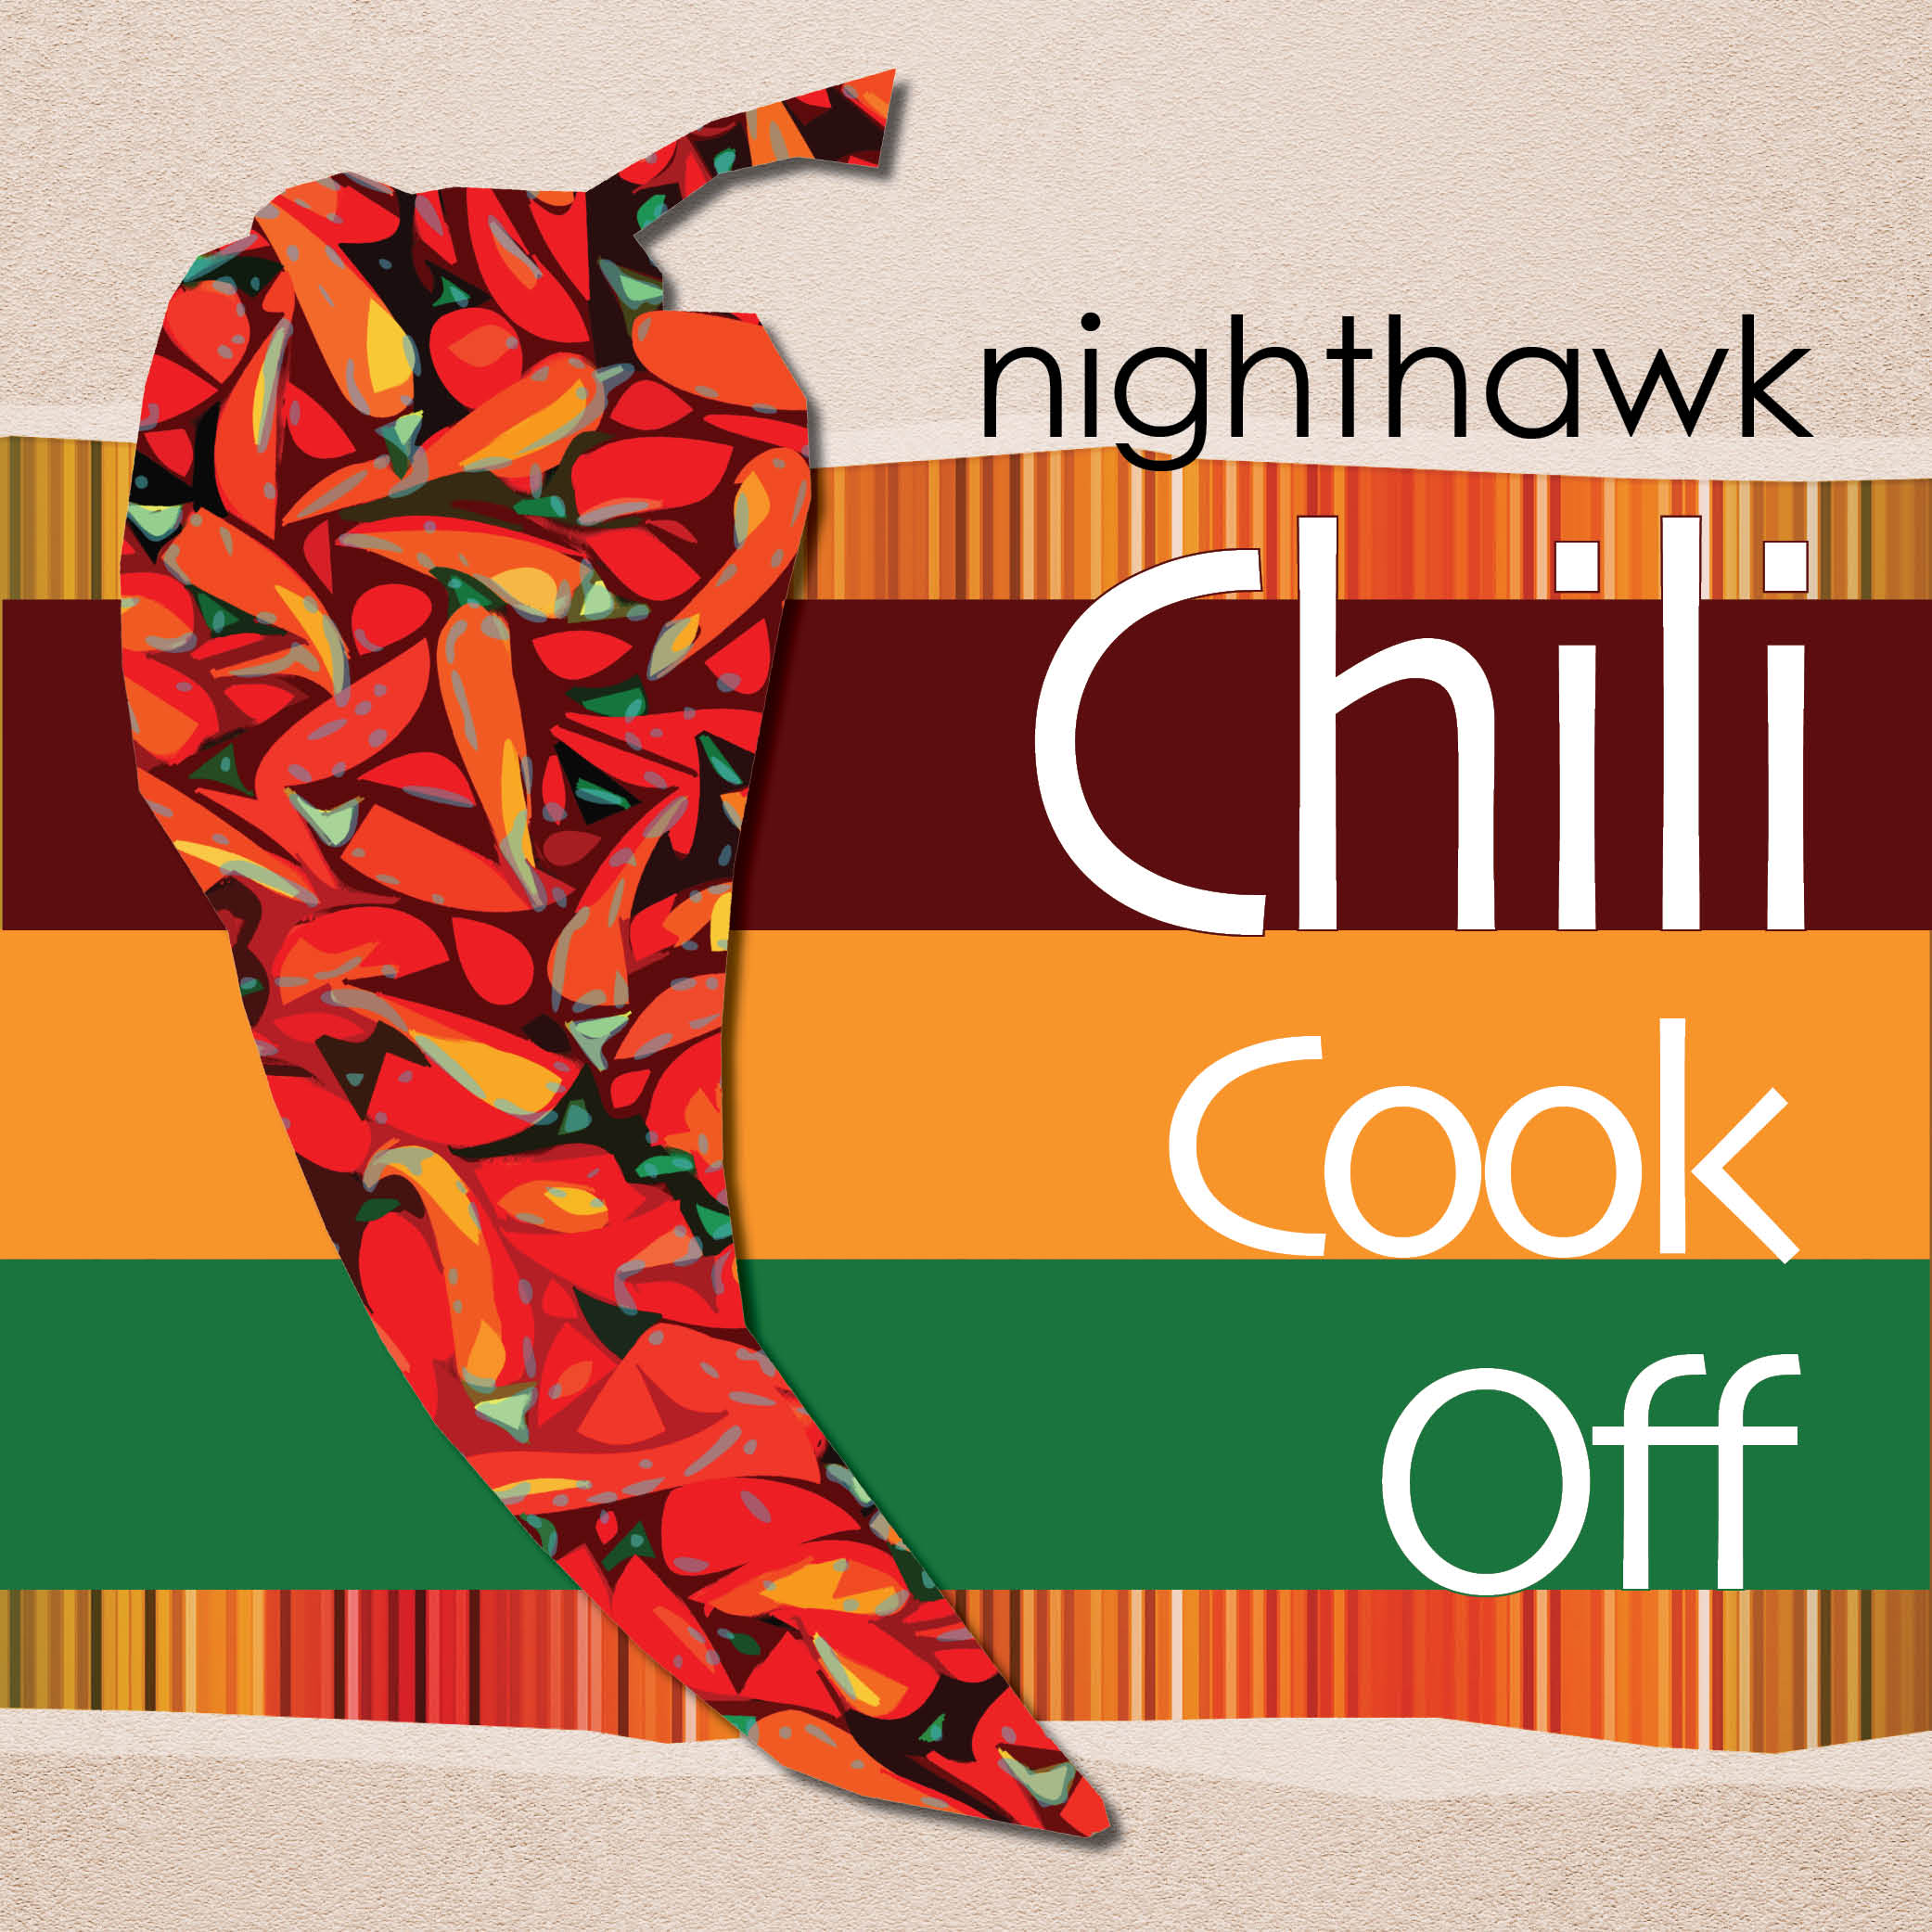 Nighthawk Chili Cook Off